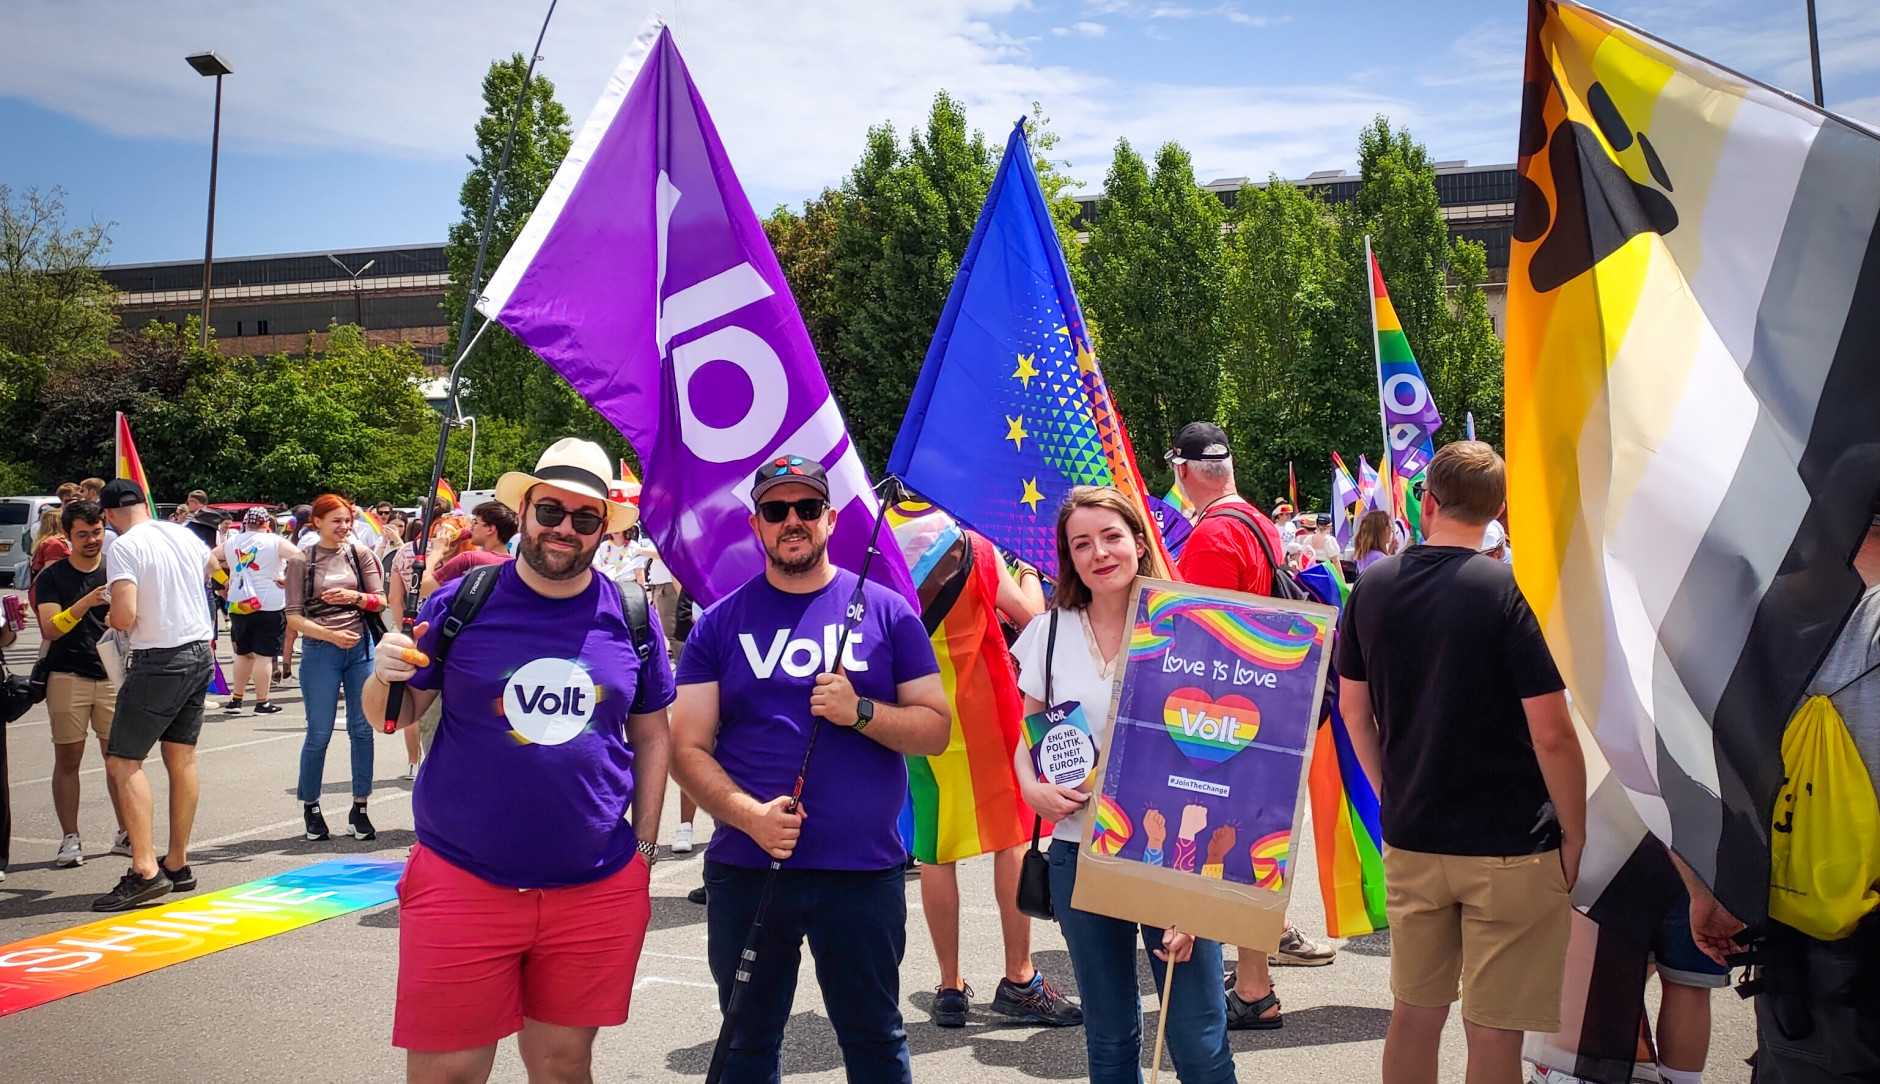 Philippe Schannes holding a Volt flag, Daniel Silva holding a EU/Pride flag and Aurélie Dap holding a poster with 